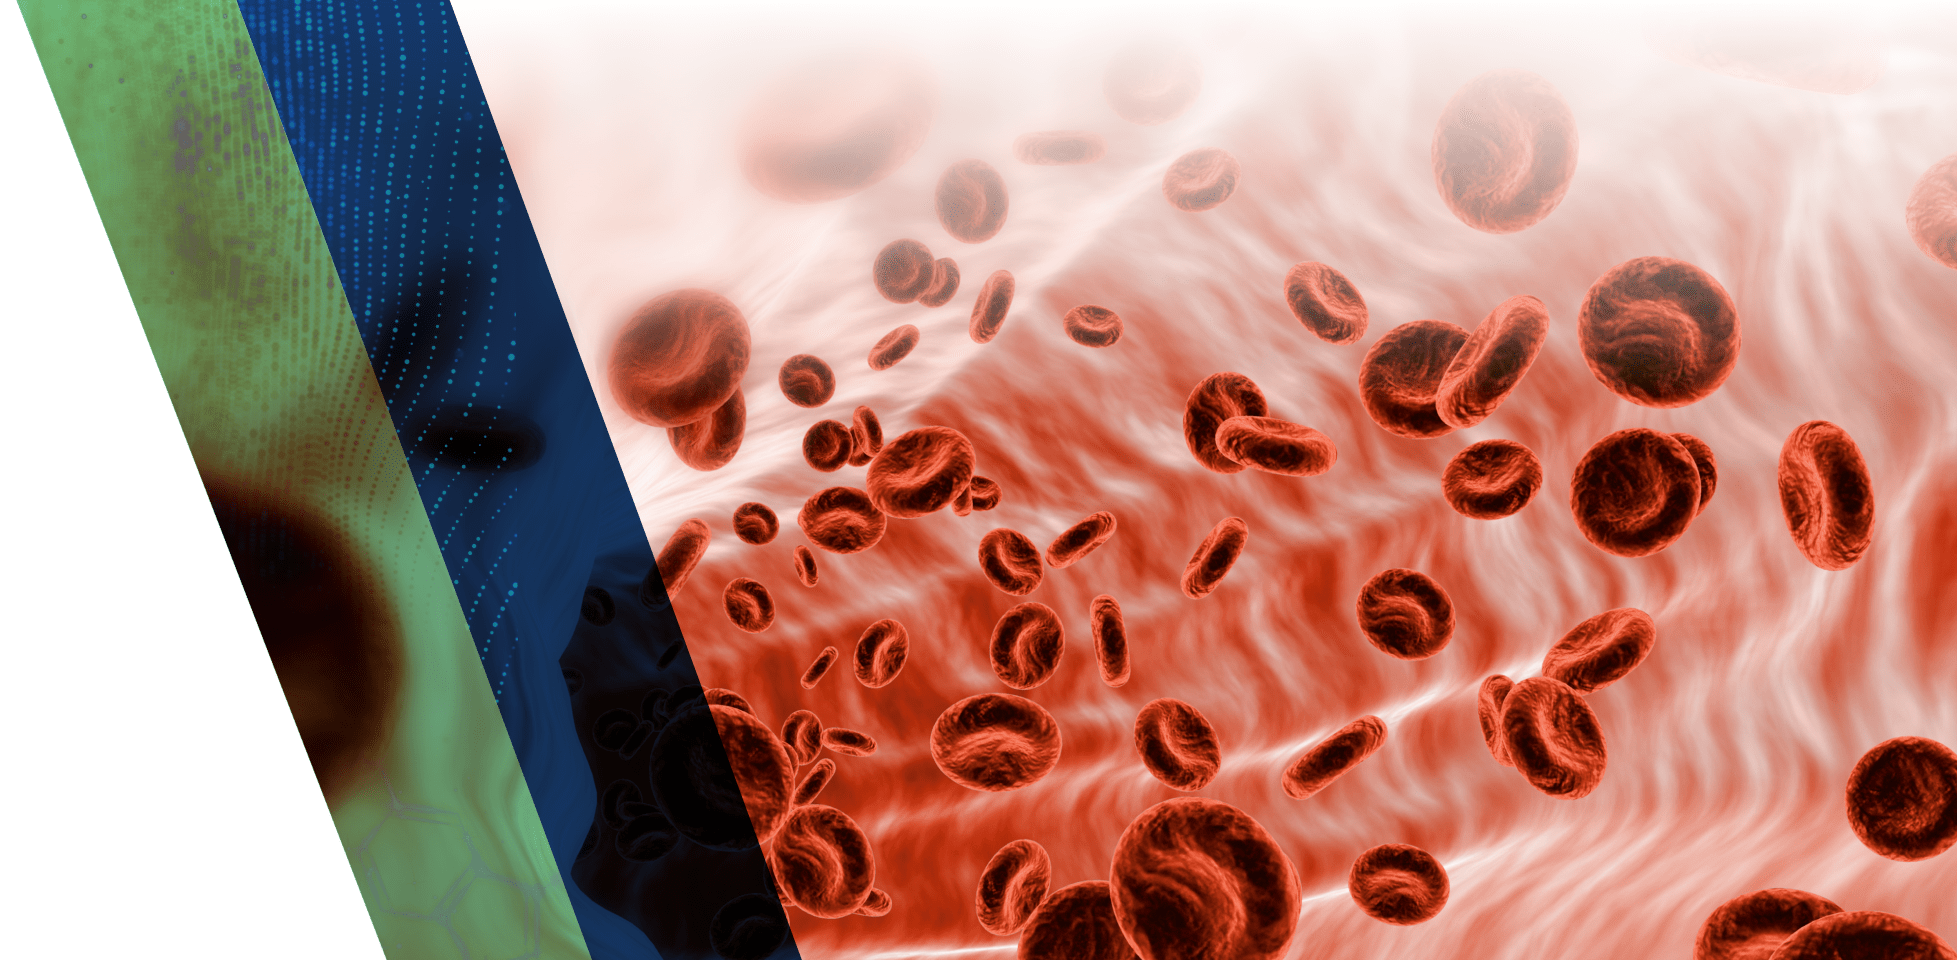 Red blood cells travel through an artery.